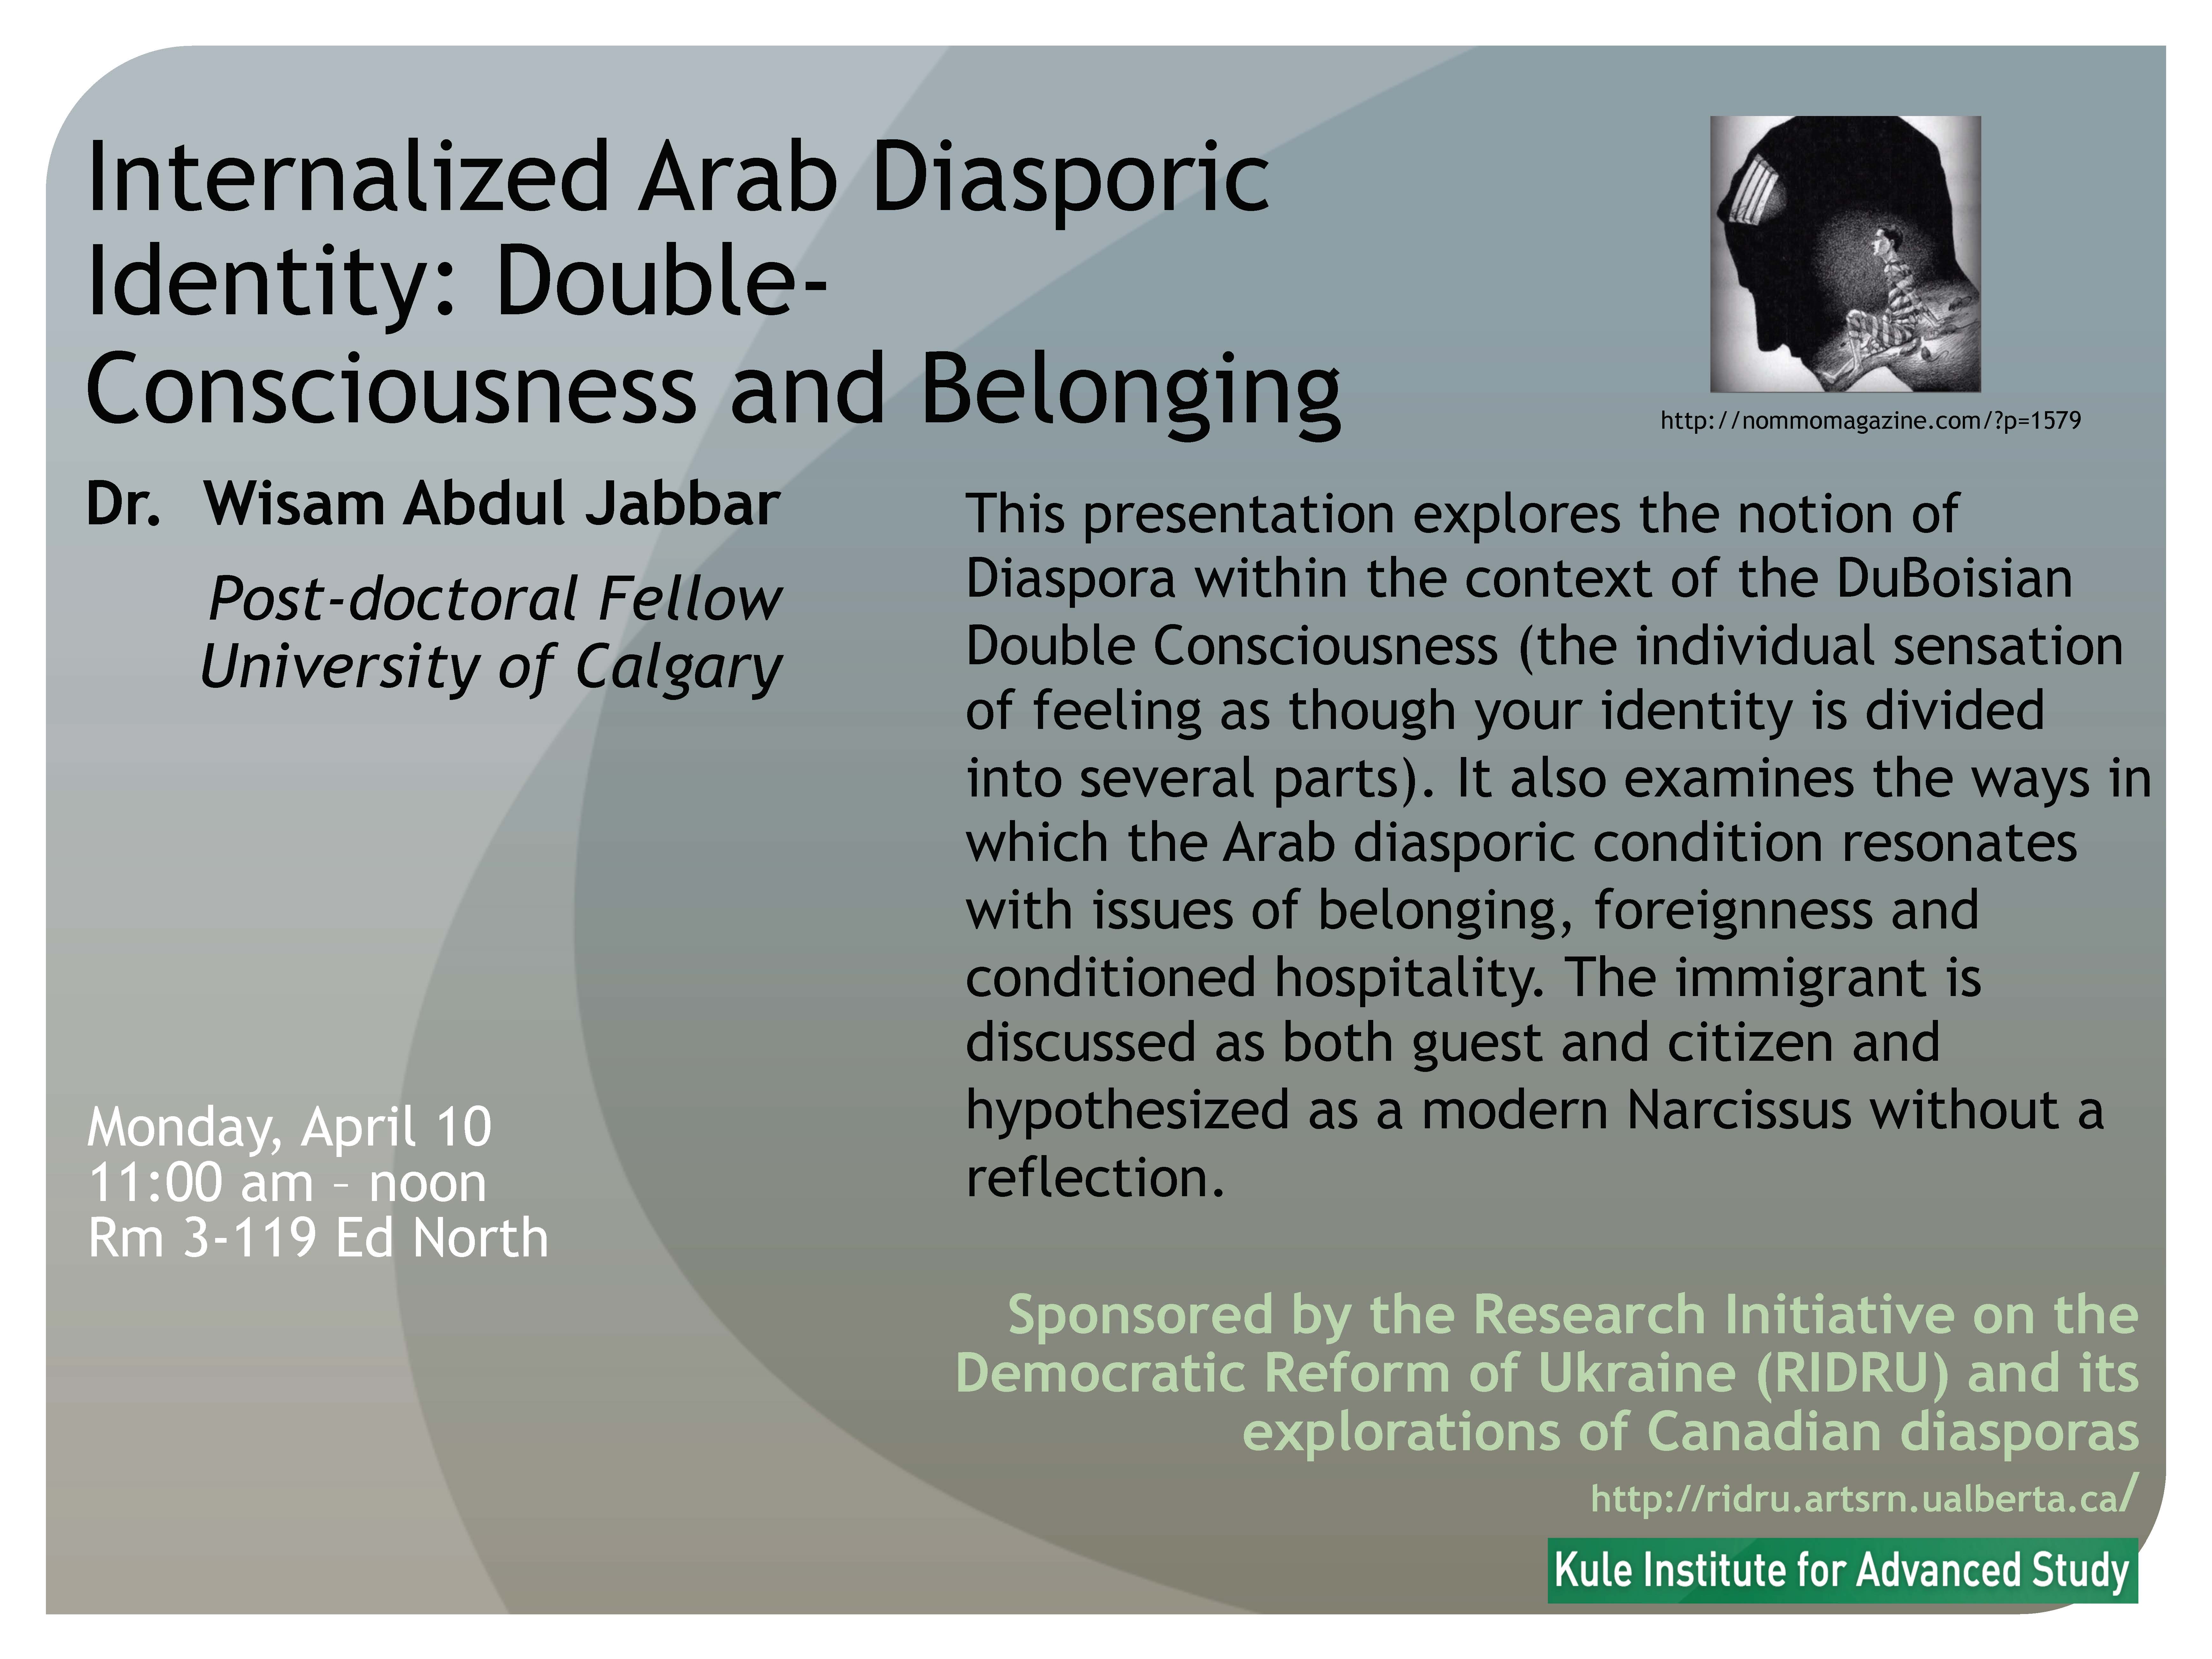 Wisam Abdul Jabbar “Internalized Arab Diasporic Identity: Double- Consciousness and Belonging”